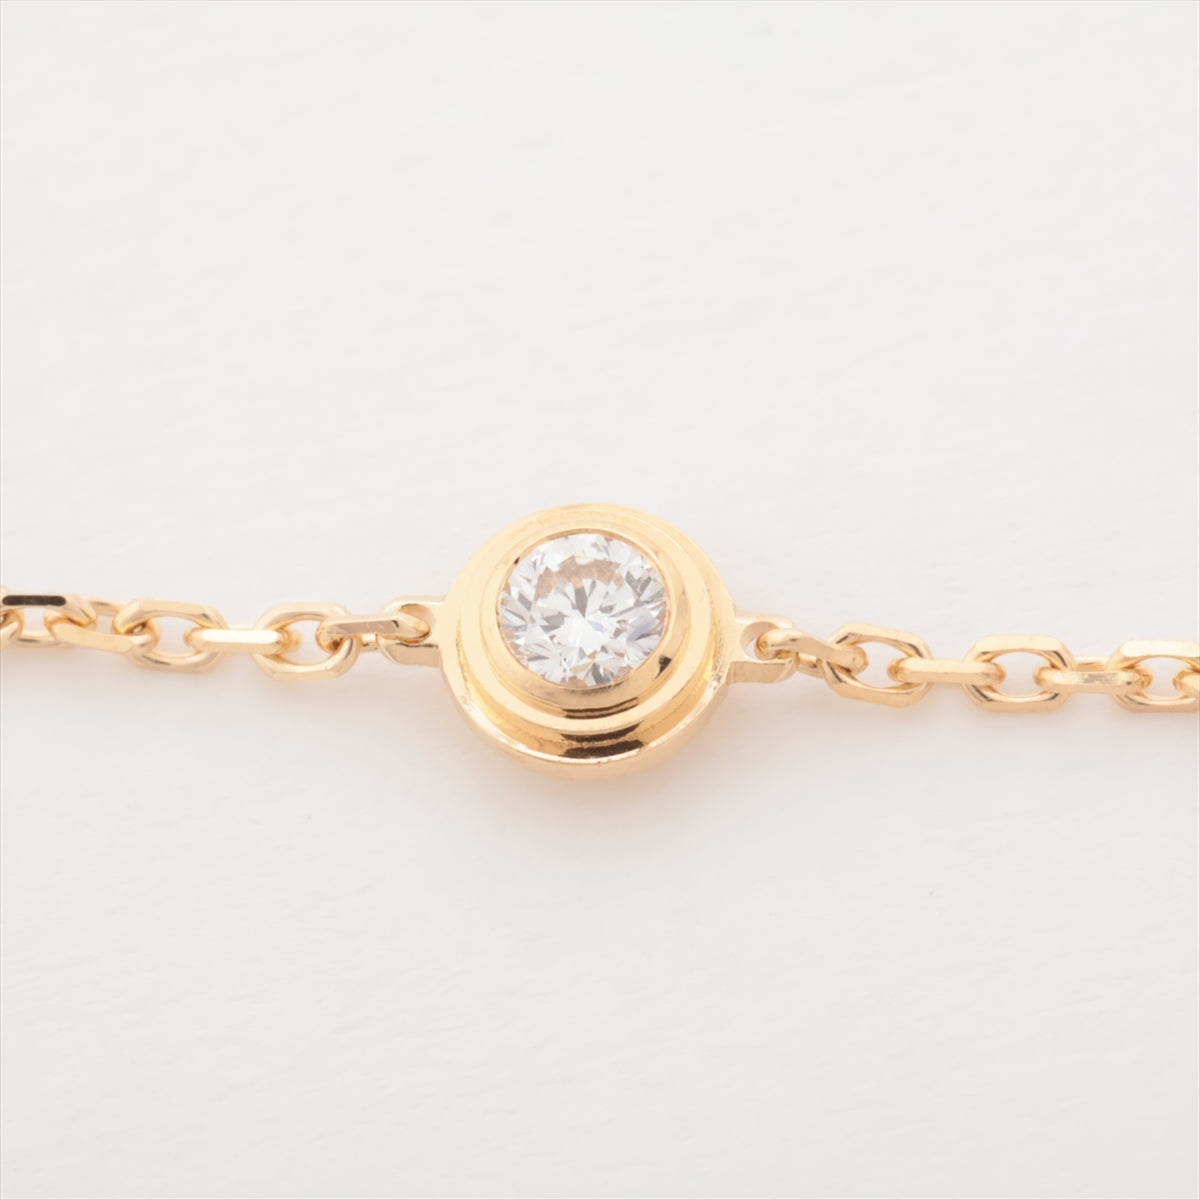 Cartier XS Diamond Bracelet 750 (YG) 1.4g